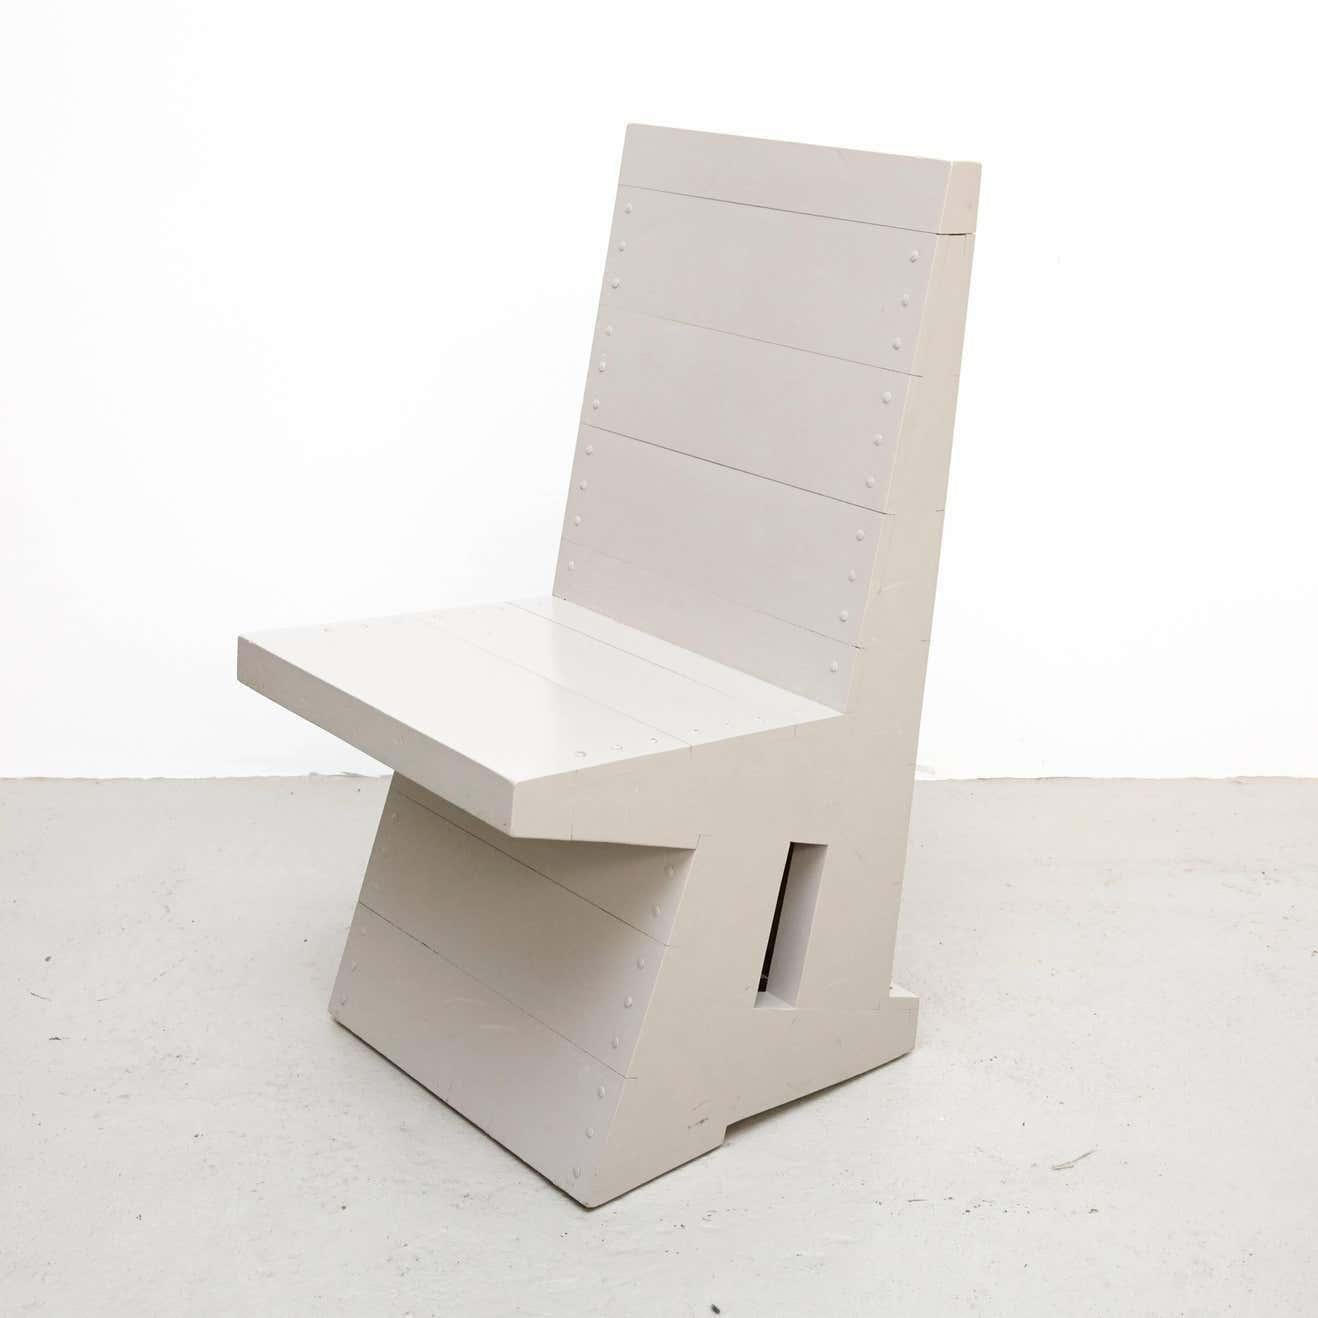 Rare Pair of Dom Hans van der Laan Easy Grey Wood Chairs For Sale 3